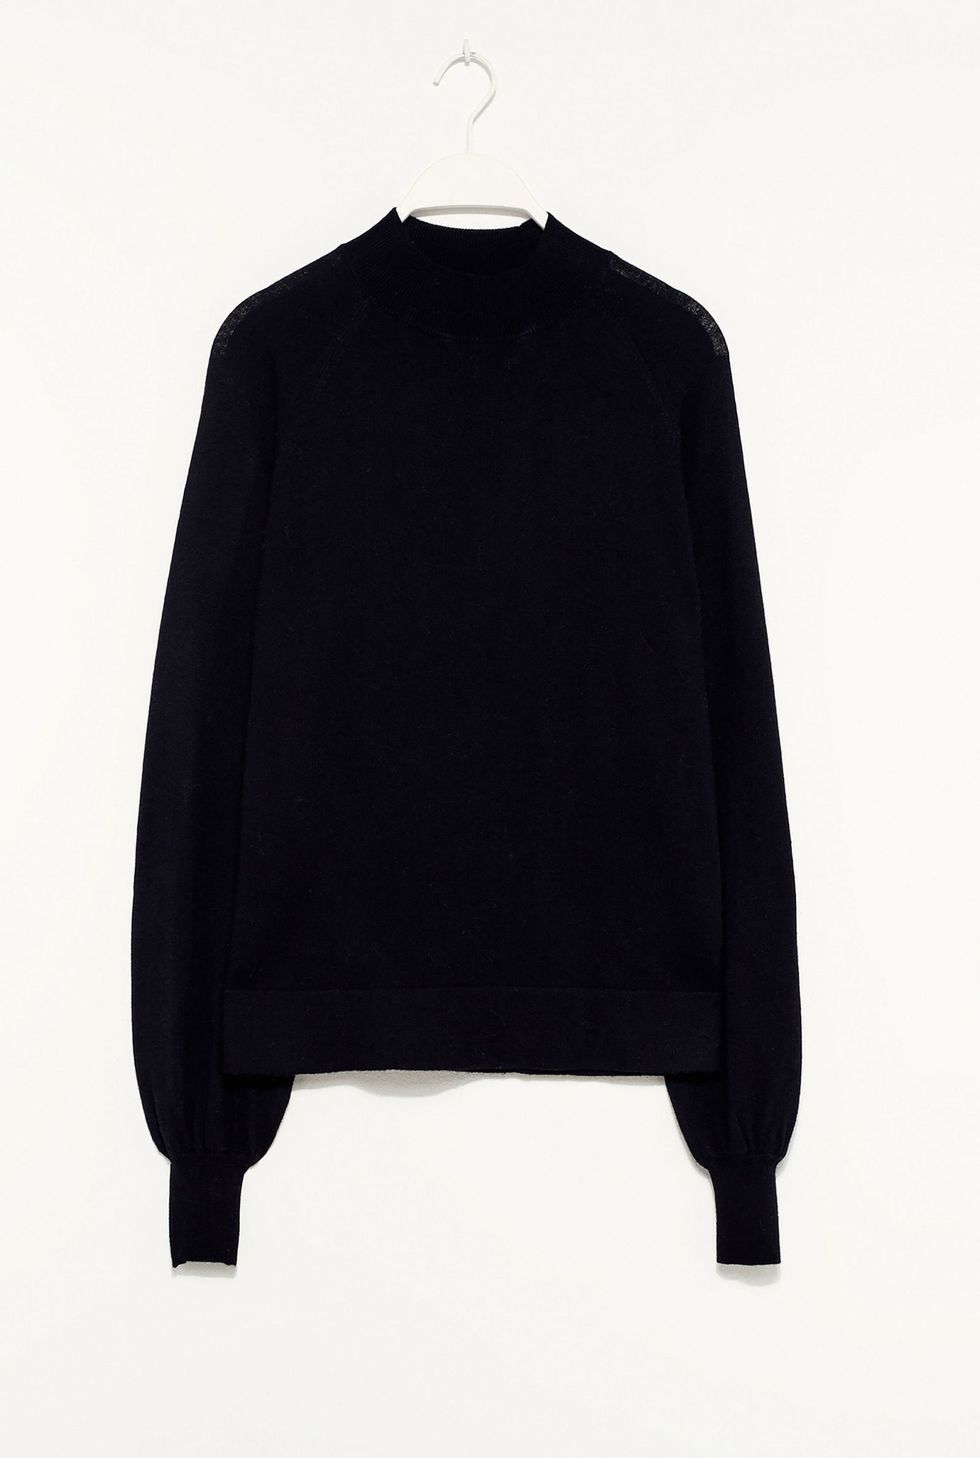 Clothing, Black, Outerwear, Sleeve, Sweater, Long-sleeved t-shirt, Neck, Zipper, Collar, Top, 